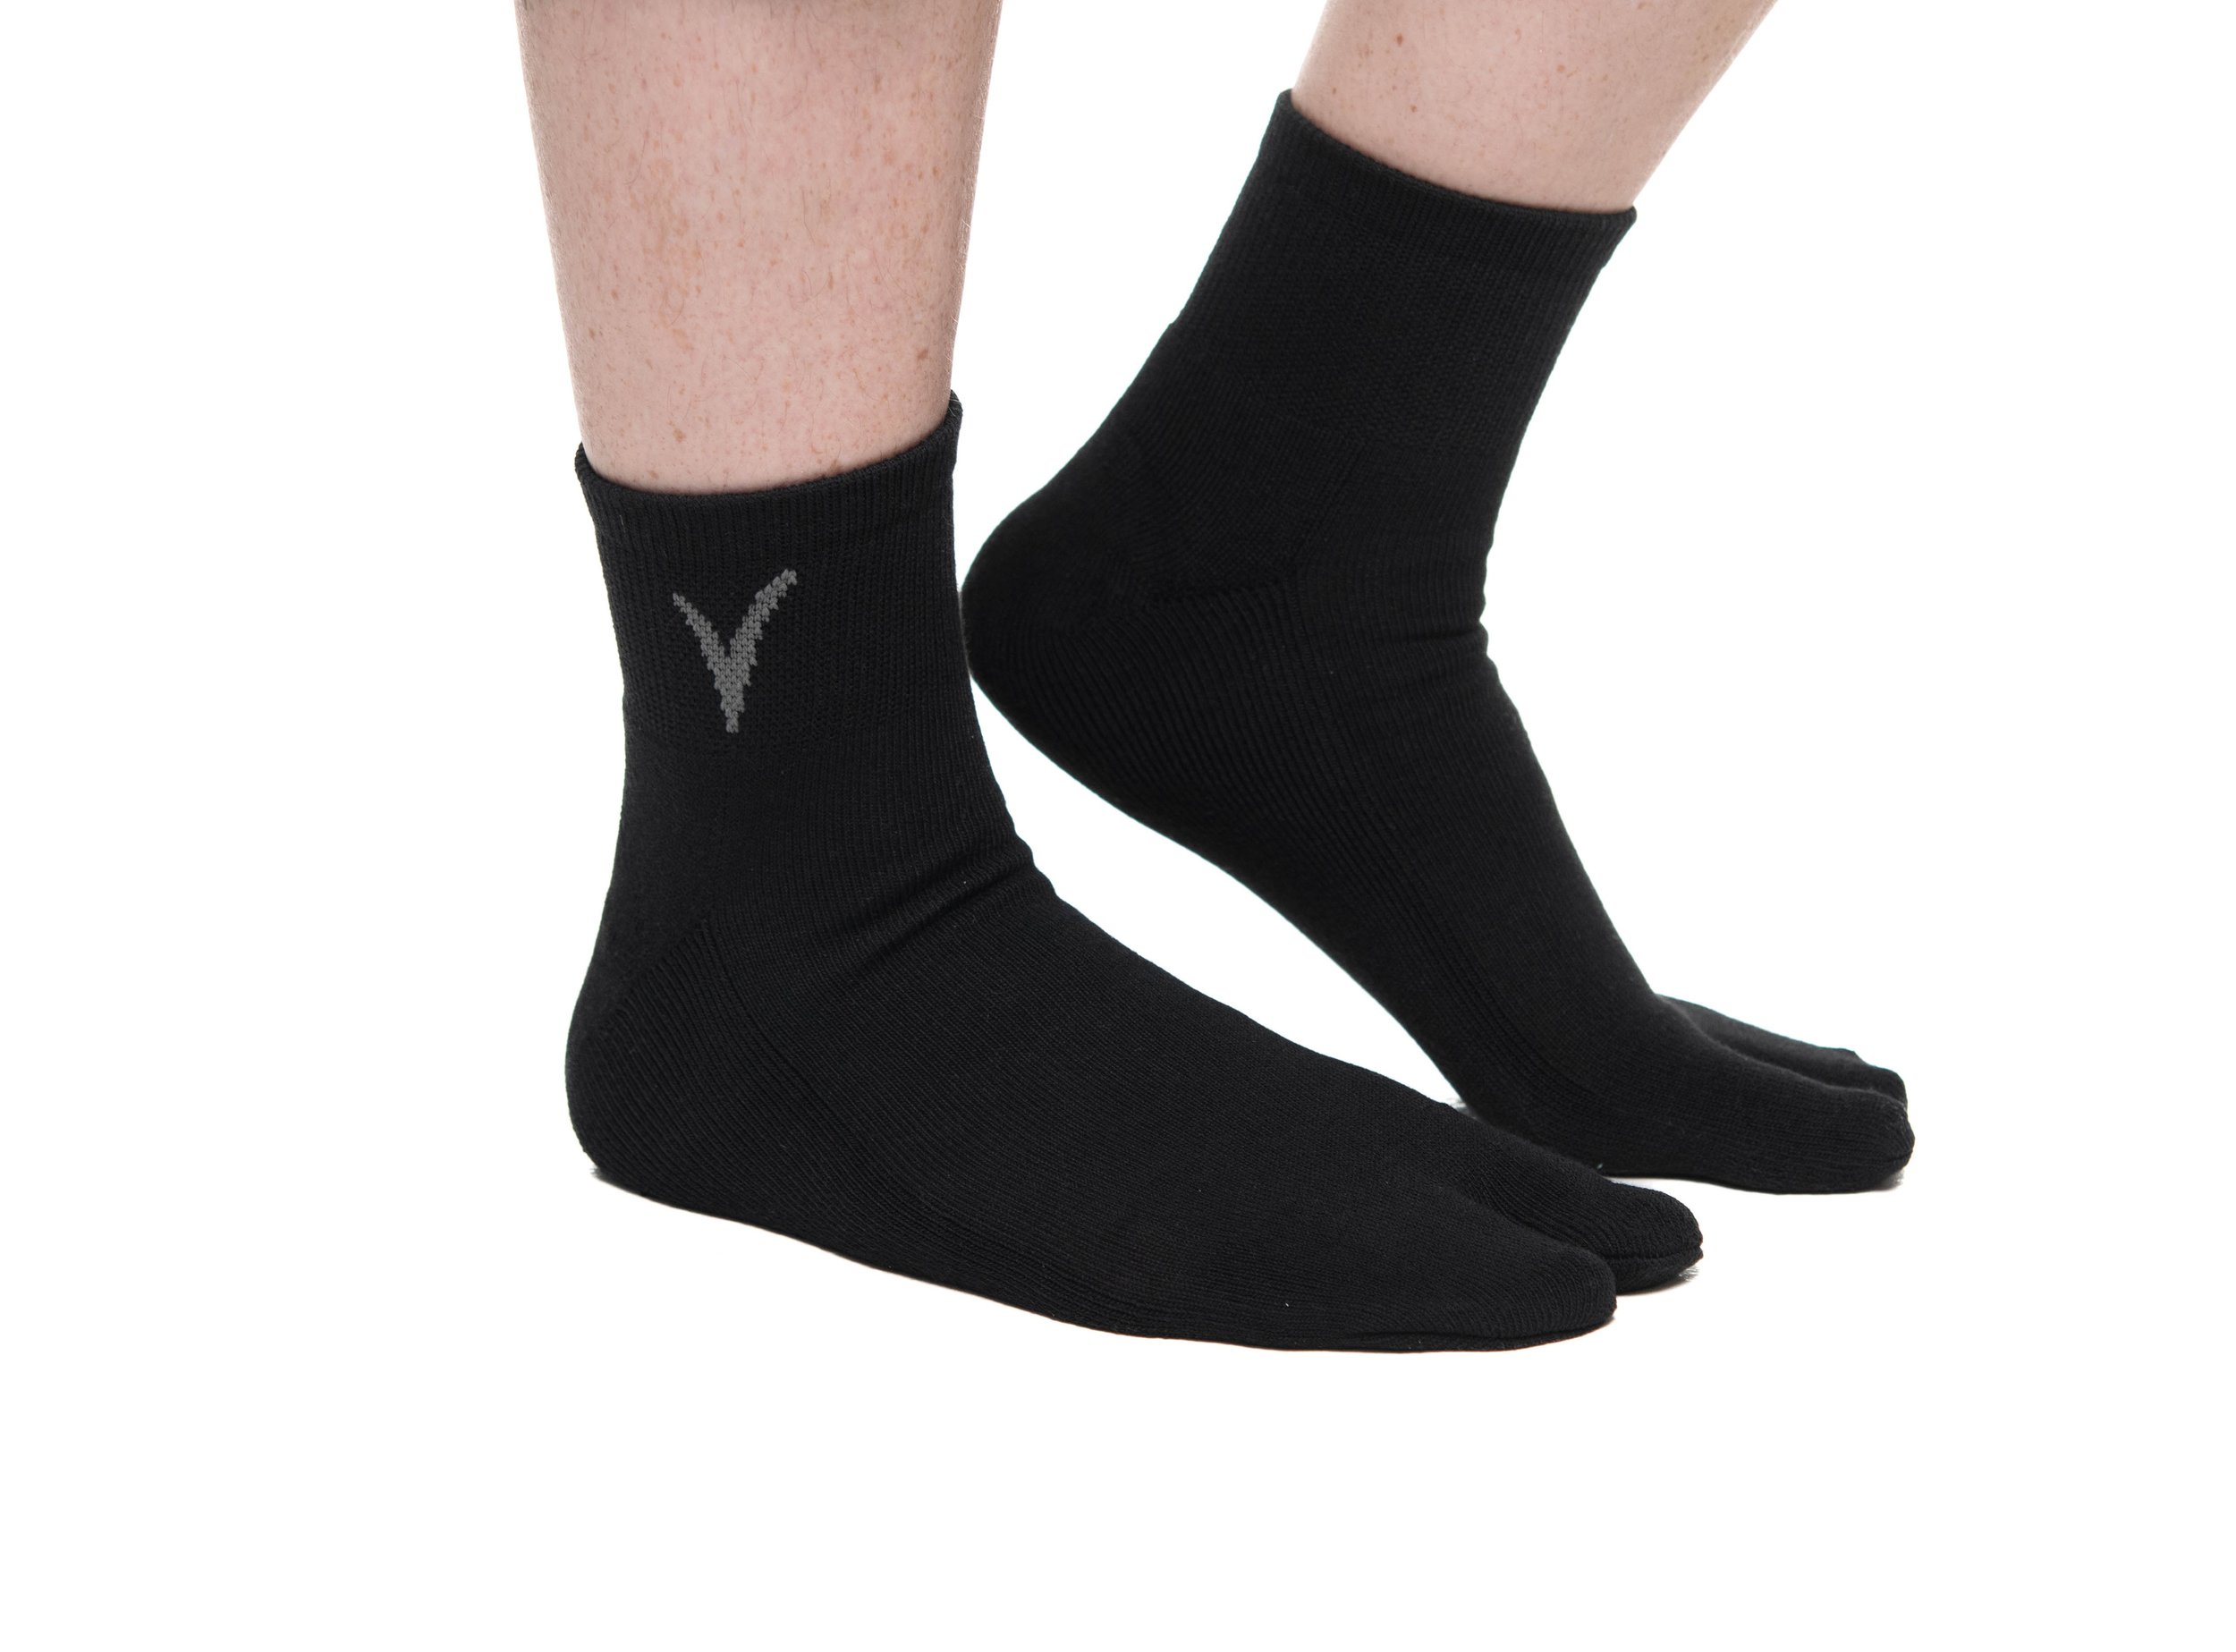 fvwitlyh Flip Flop Socks for Womens Fashion Orthotic Flip Flops